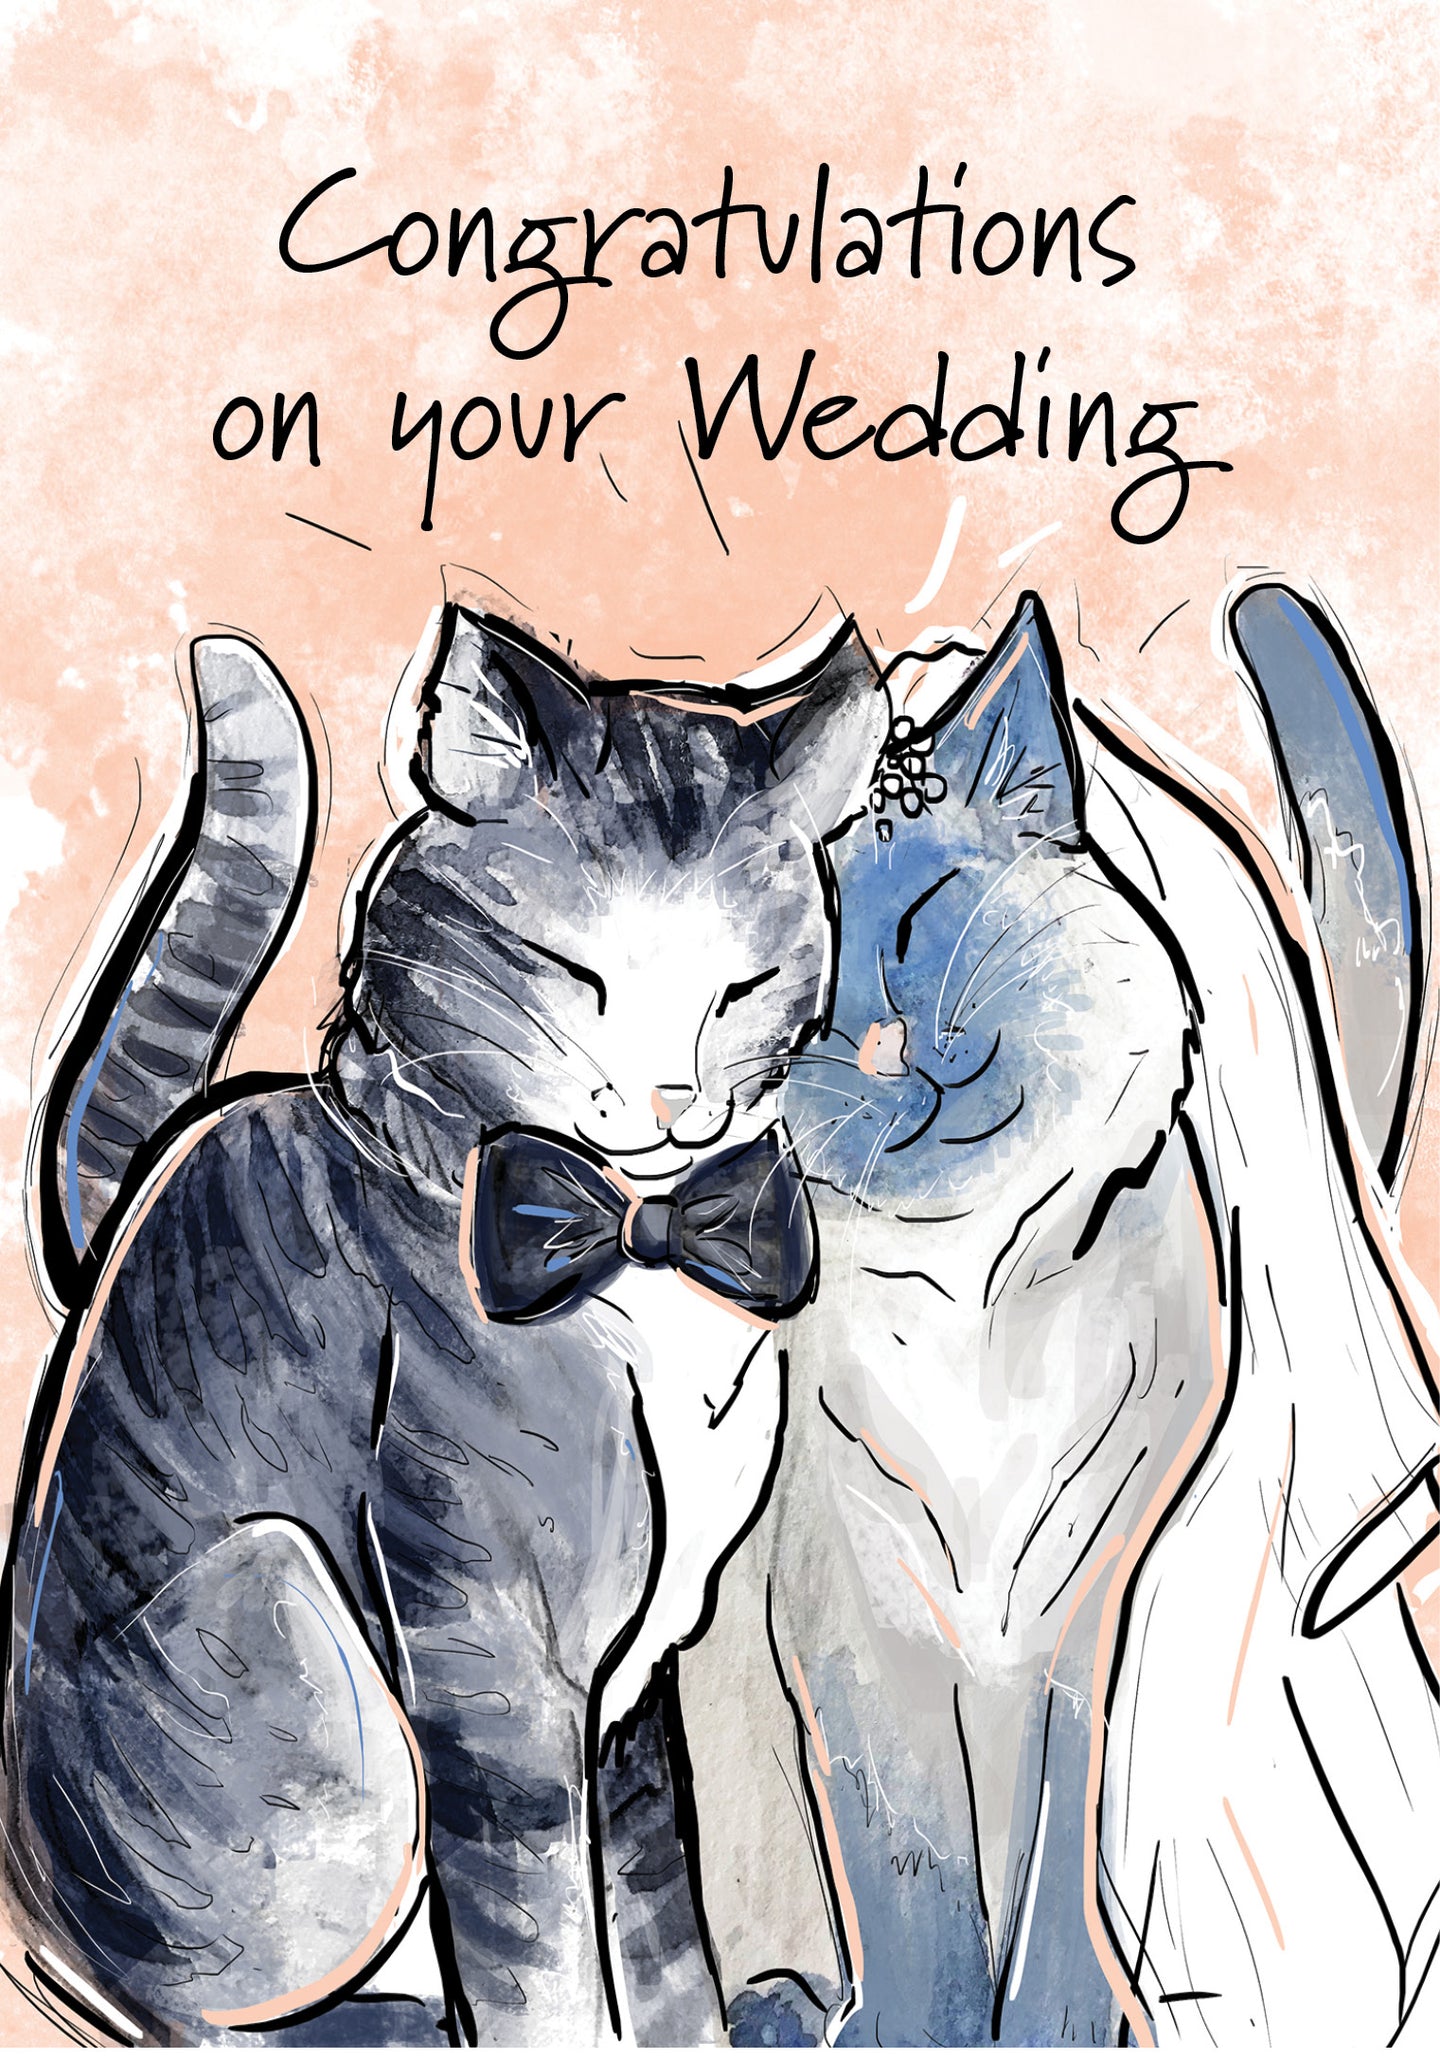 Congratulations on your Wedding! Cat Wedding Card